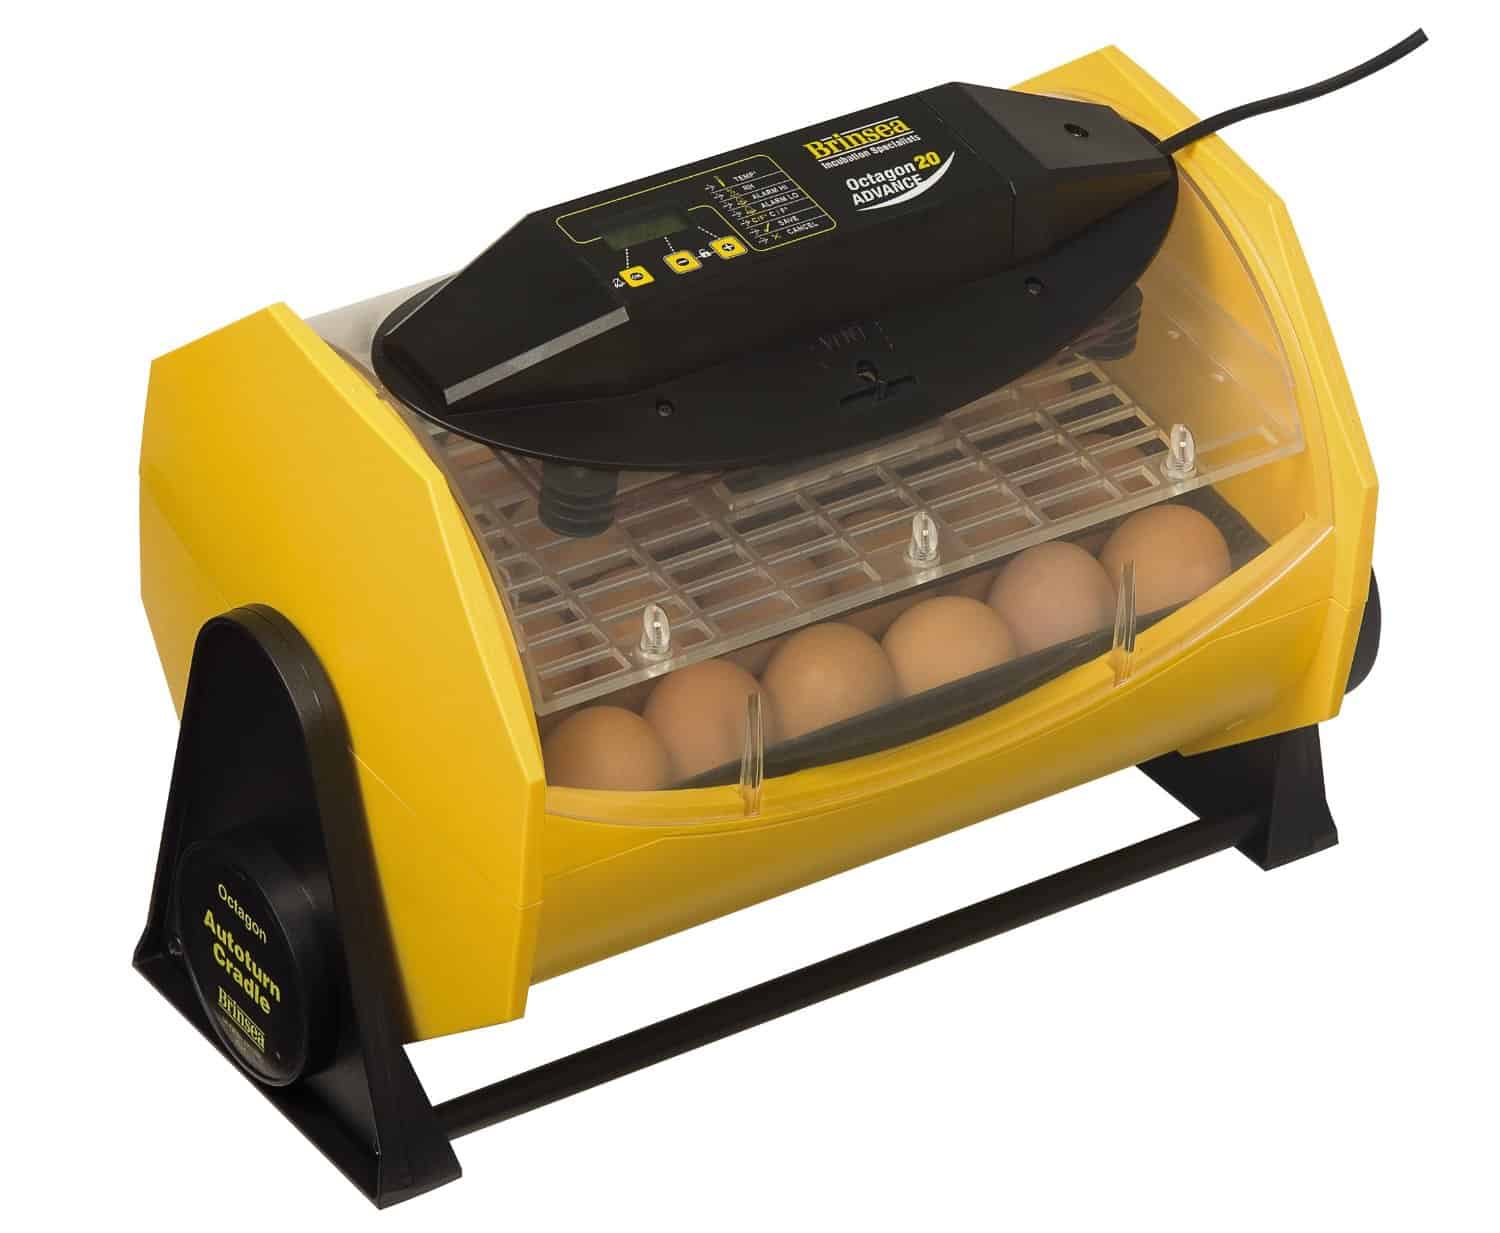 Brinsea automatic egg incubator